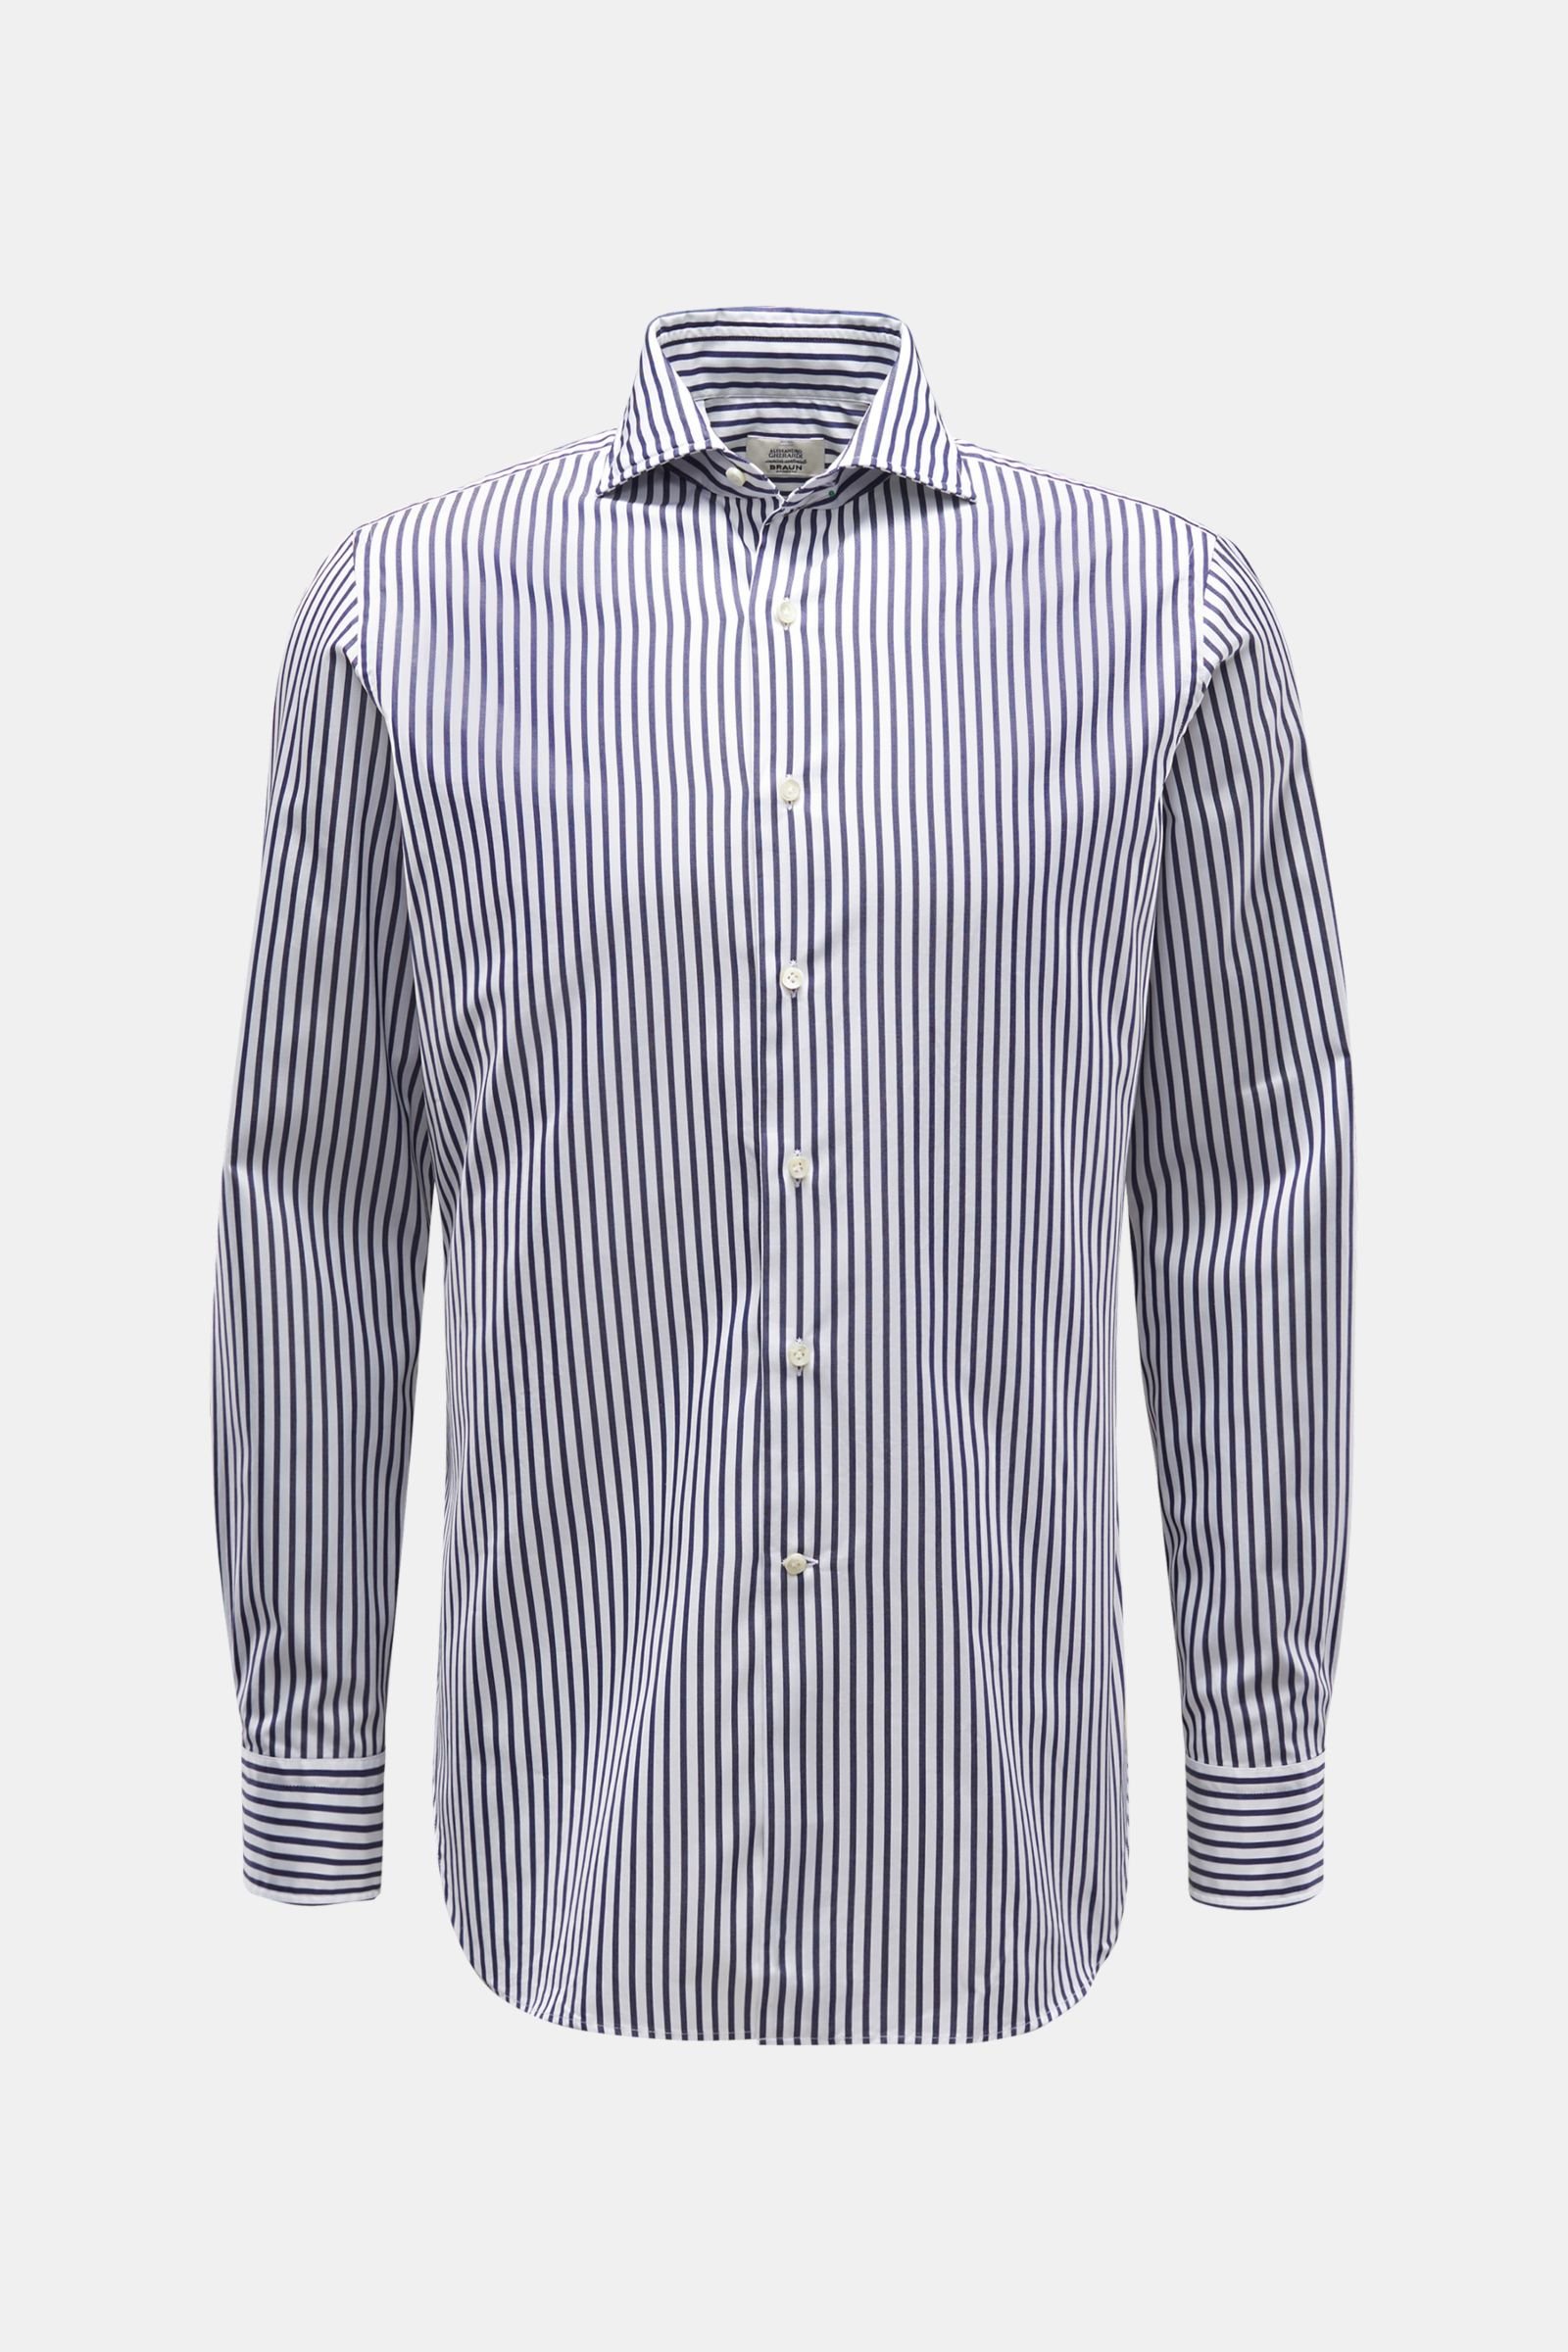 Casual shirt shark collar dark blue/white striped